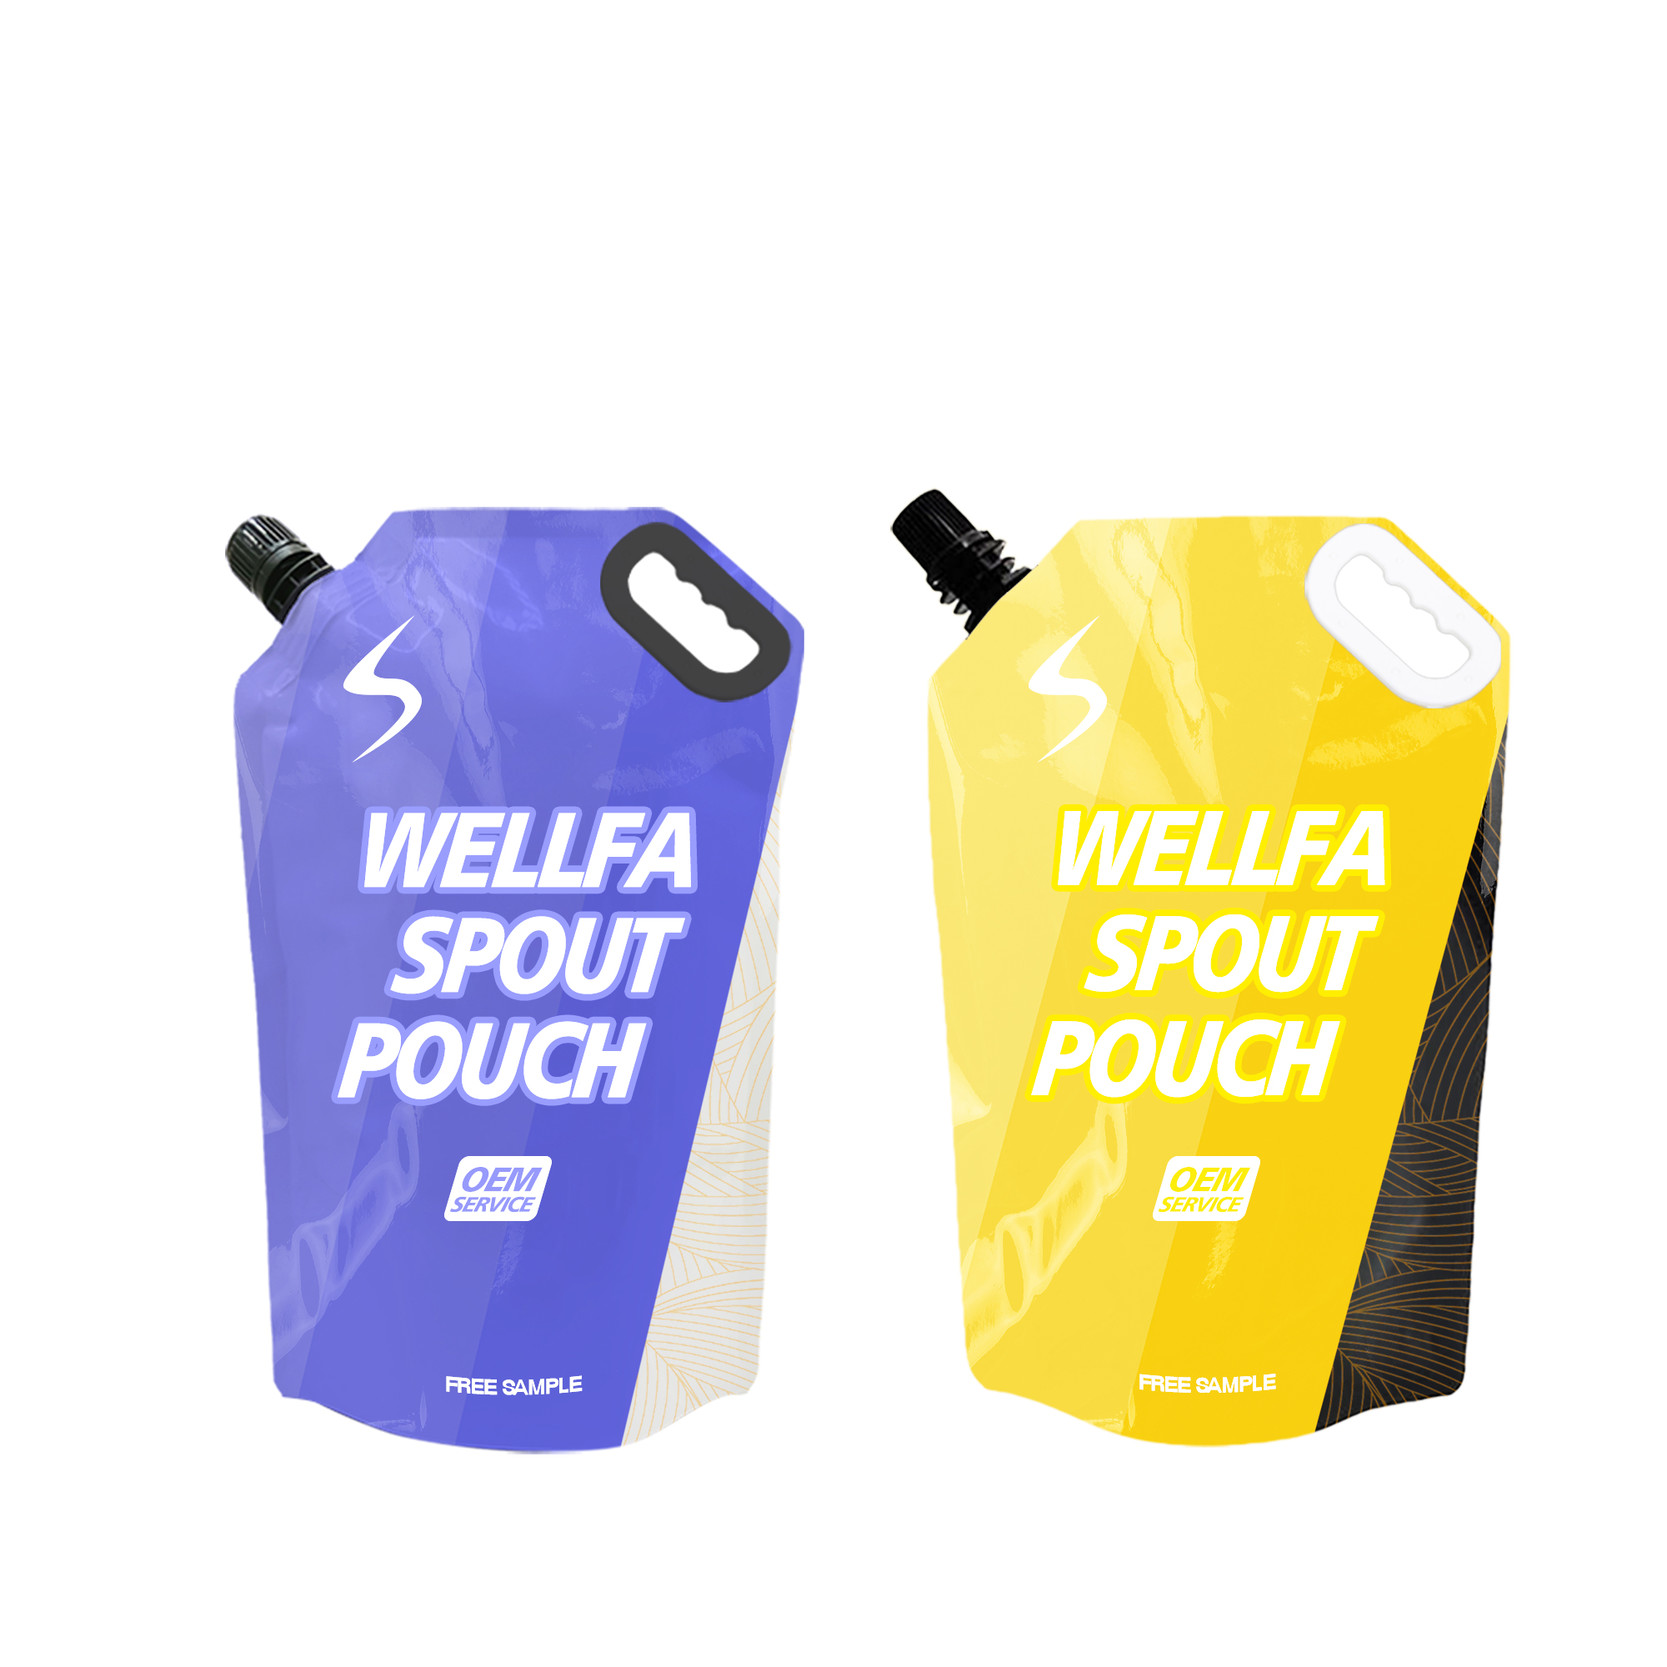 5 liquid refill pouch